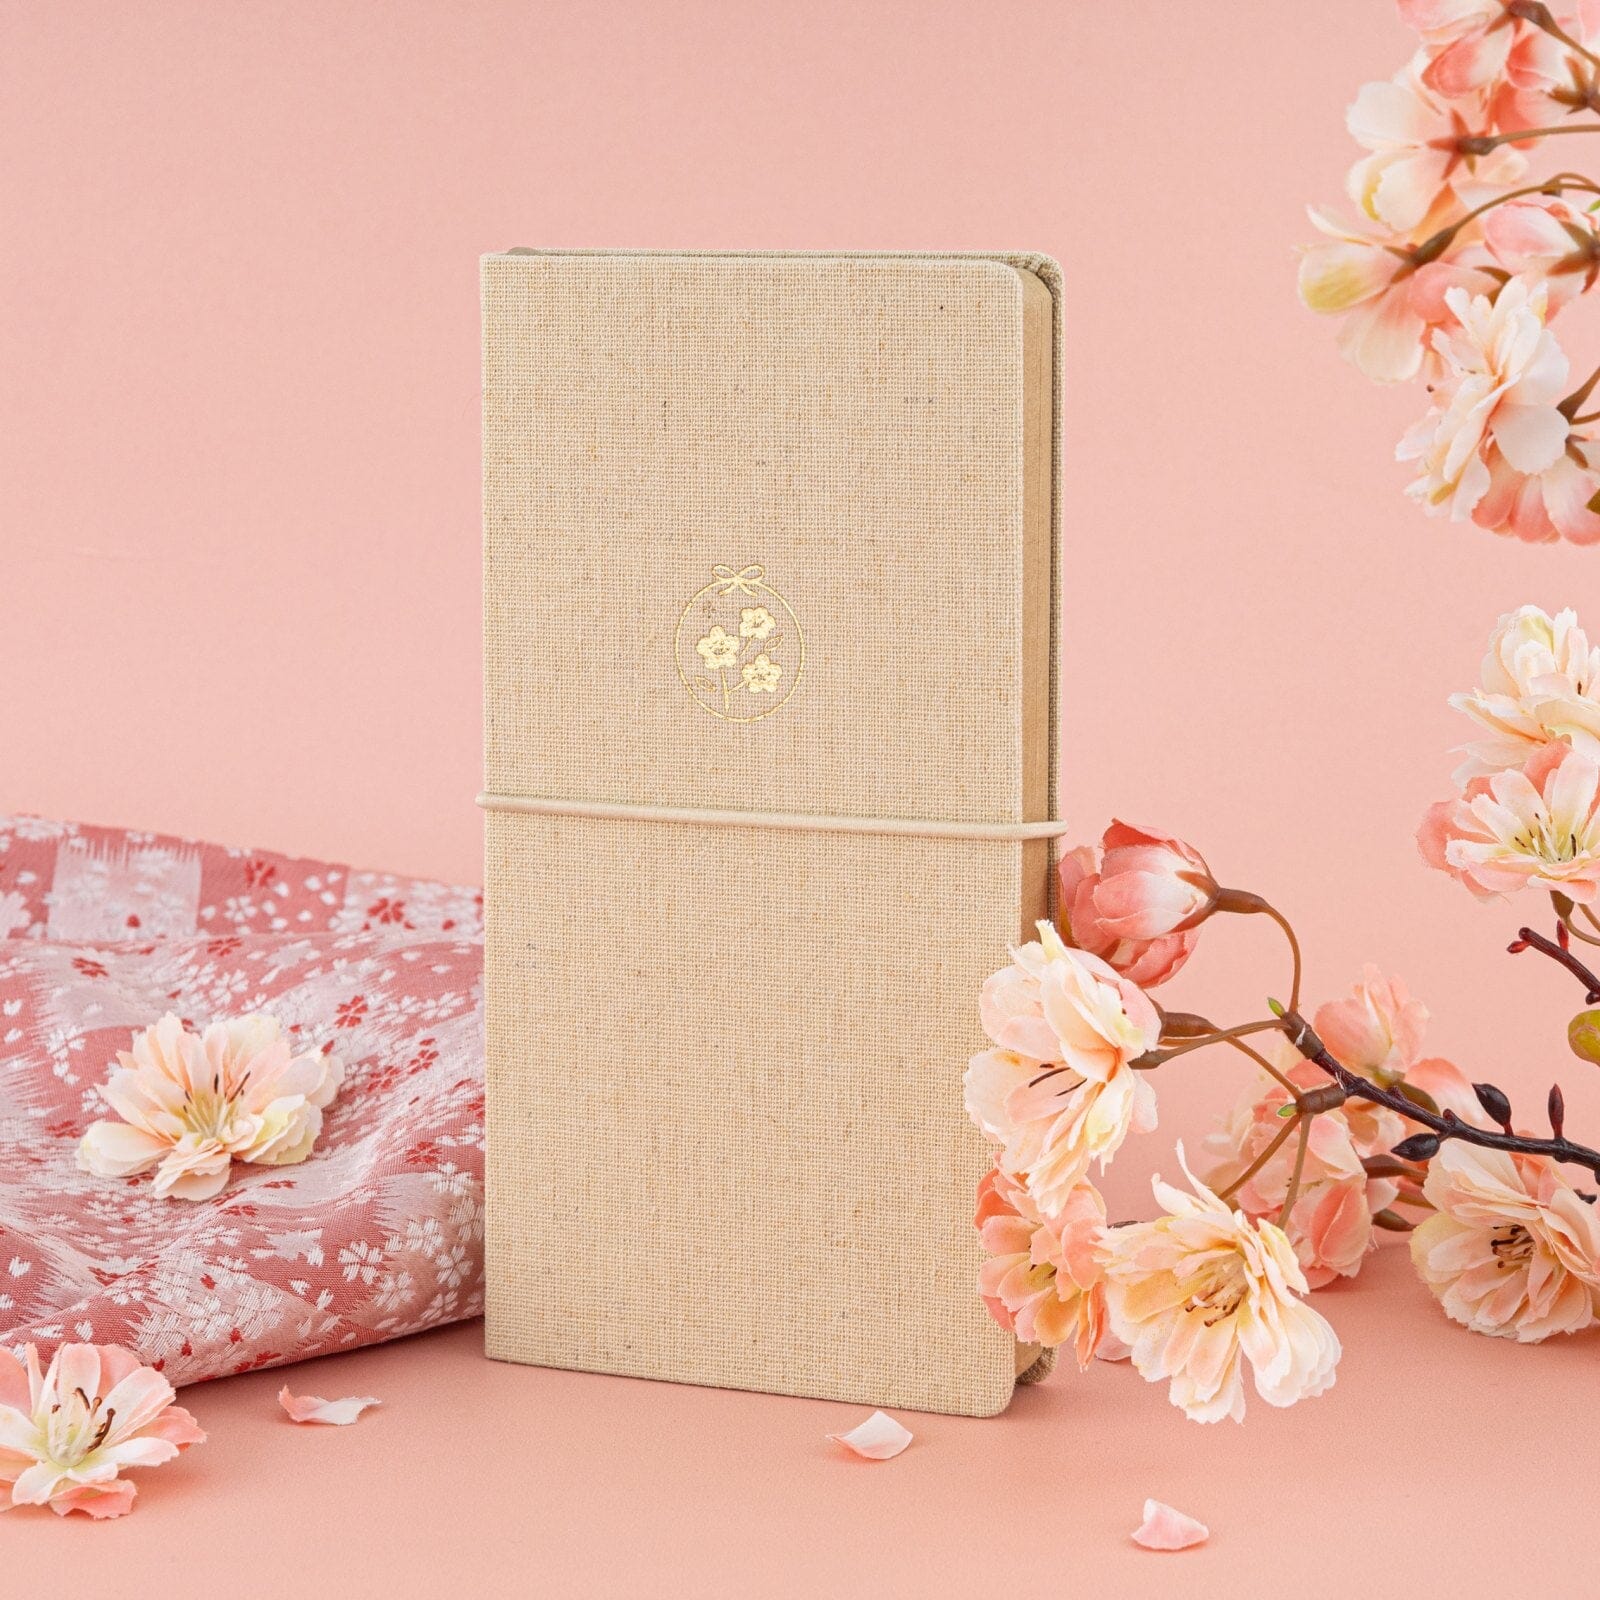 Tsuki ‘Sakura Breeze’ Kraft Paper Travel Notebook against pink background with cherry blossoms